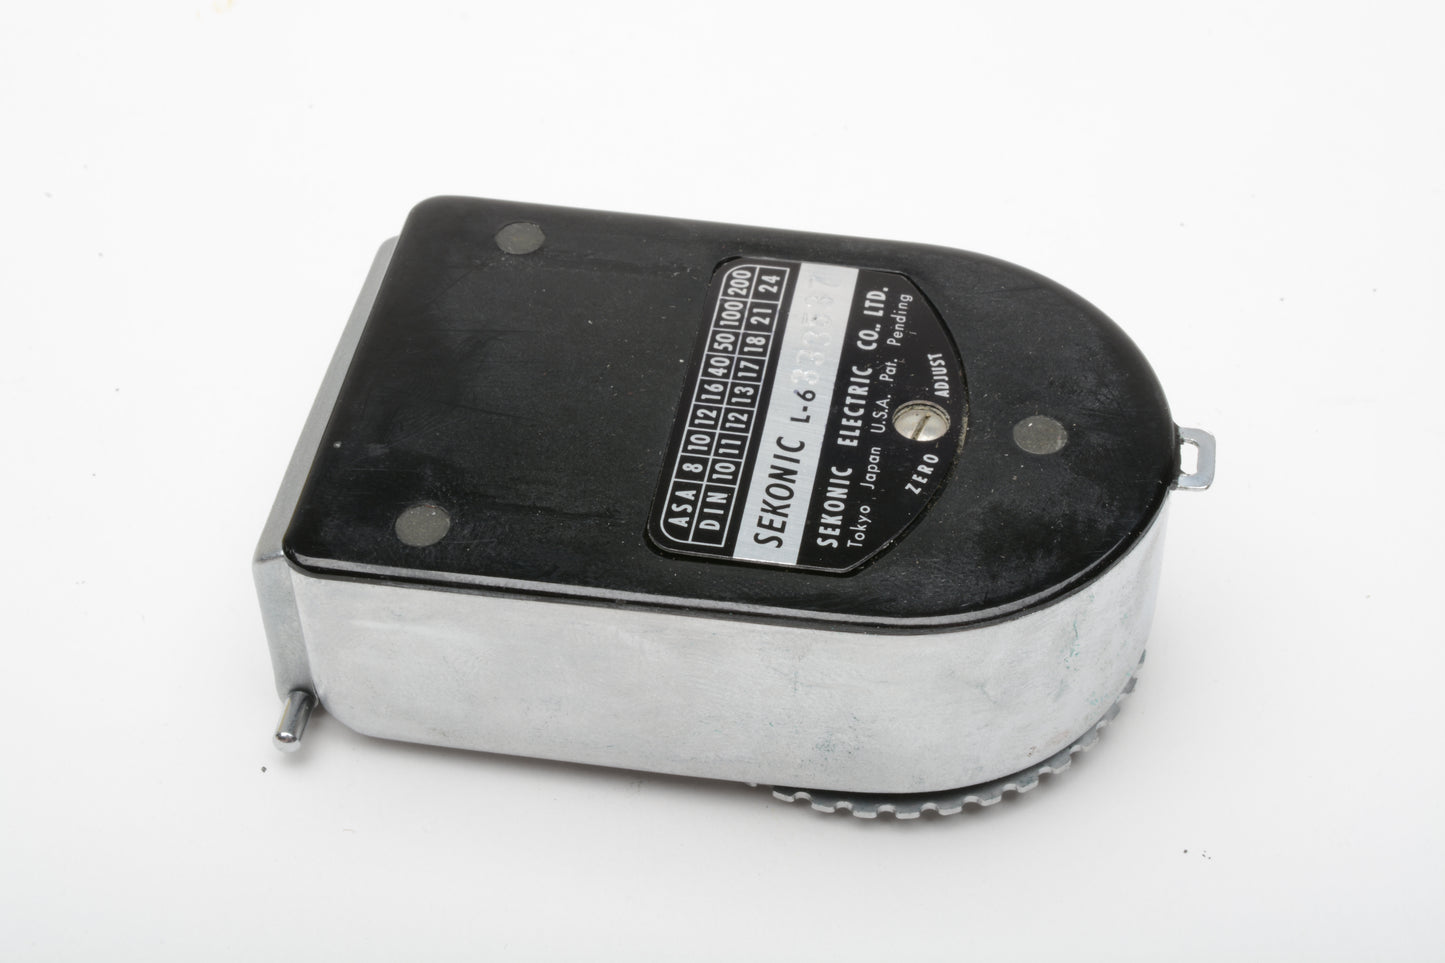 Vintage Sekonic Incident Exposure Meter Model L-VI L-6, boxed, tested